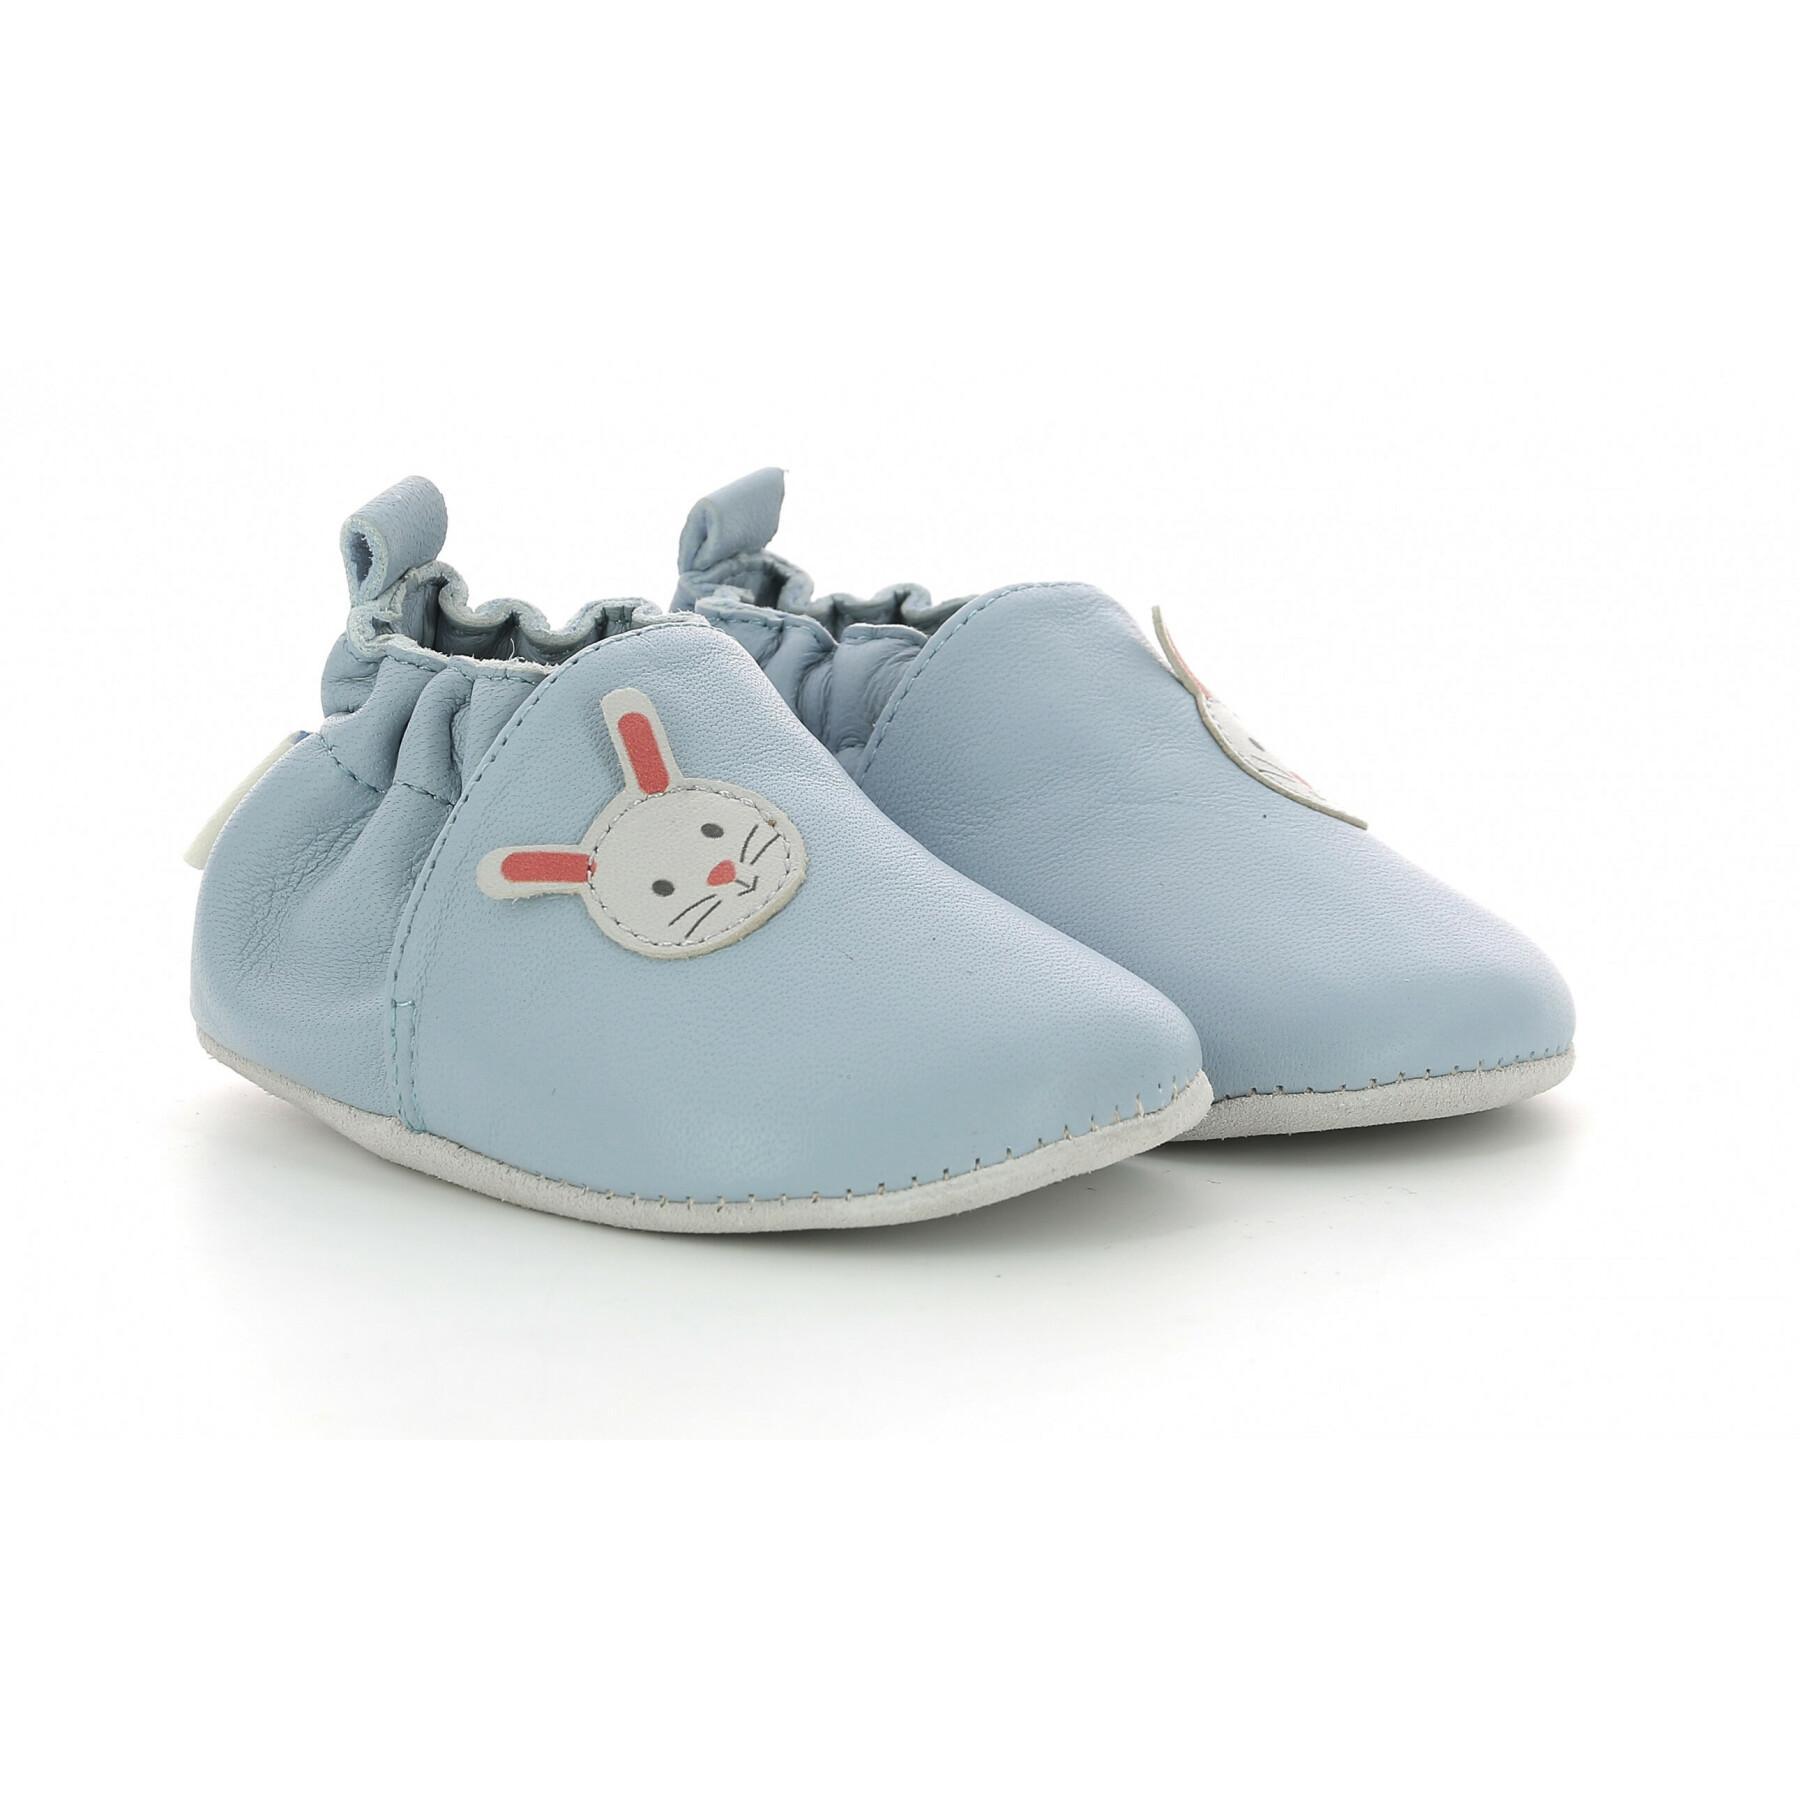 Zapatos de bebé Robeez Mimirabbit